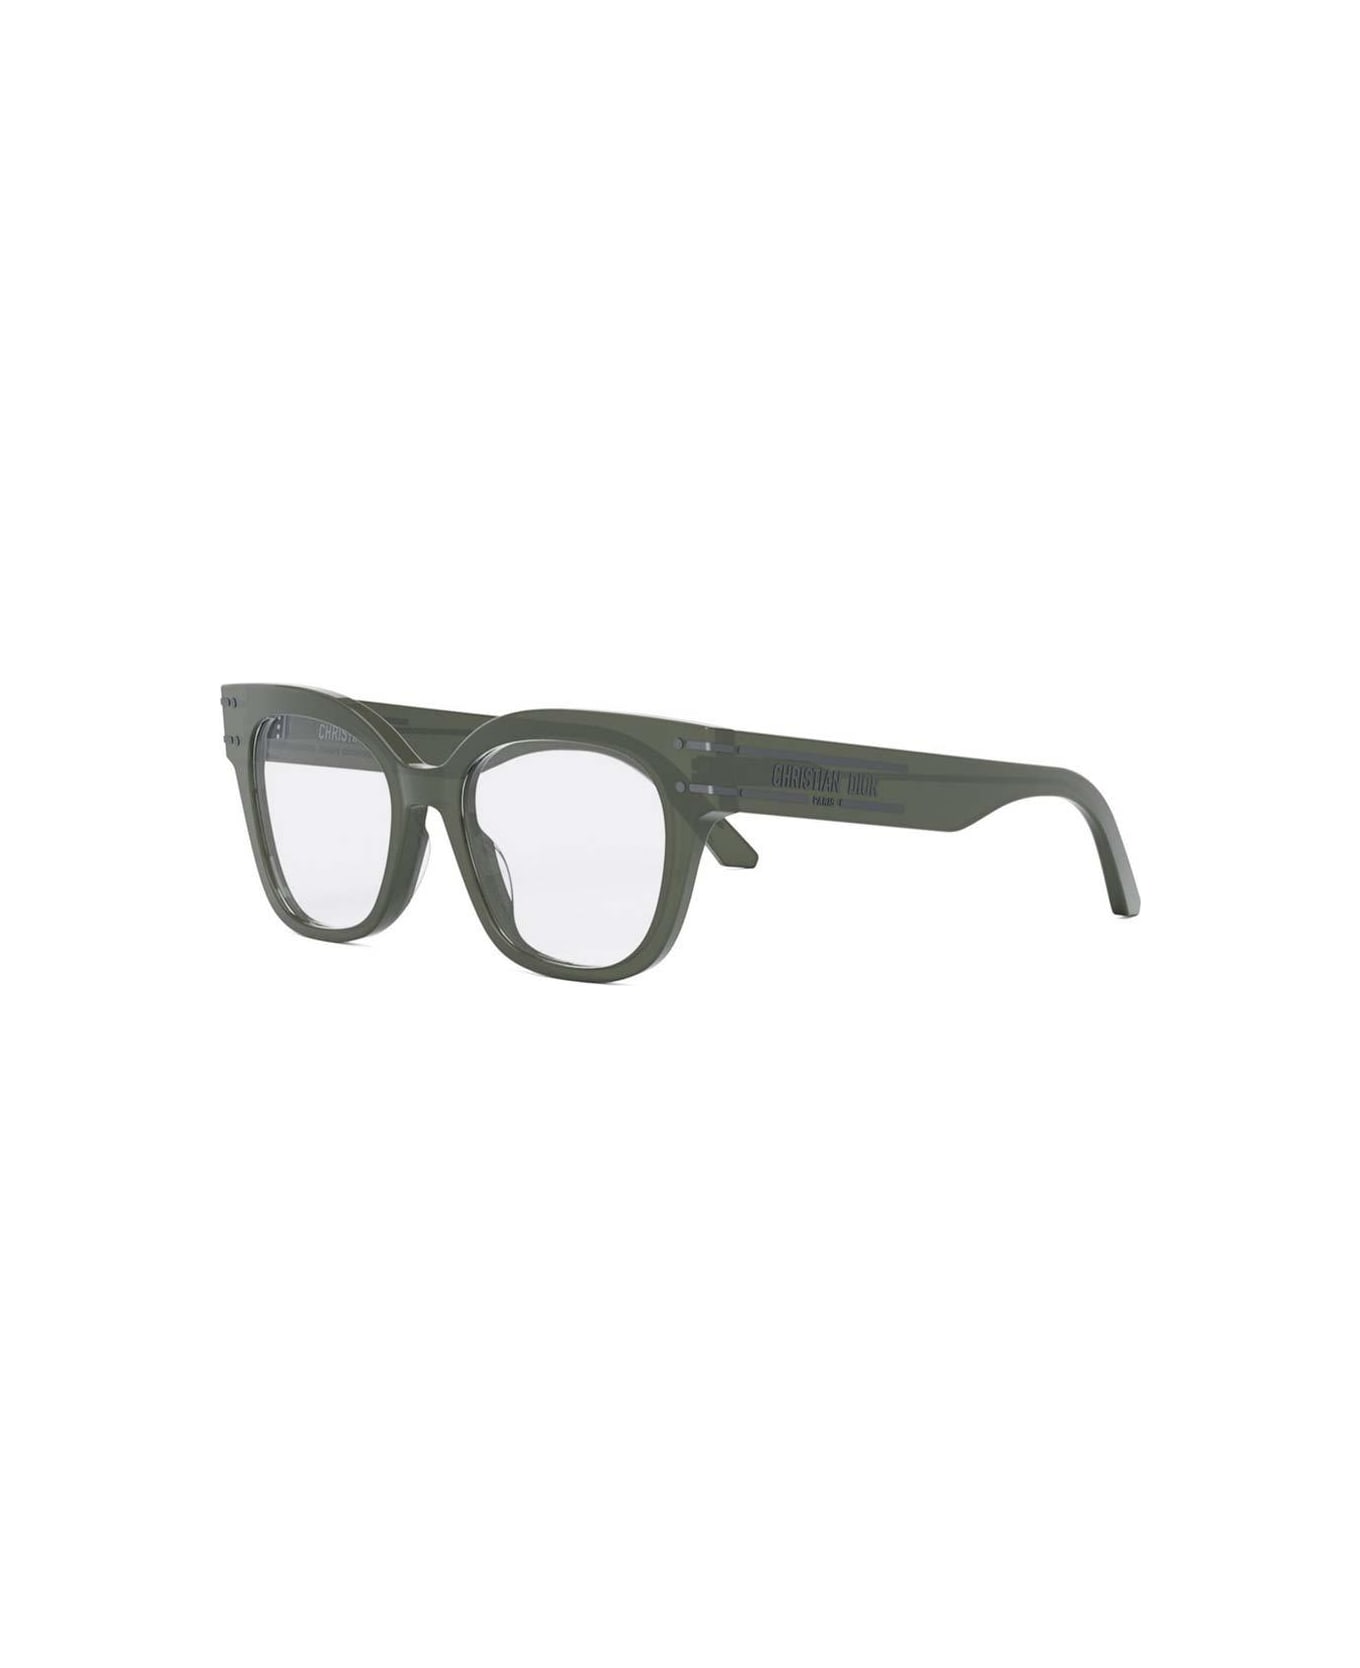 Dior Eyewear Round Frame Glasses - 5500